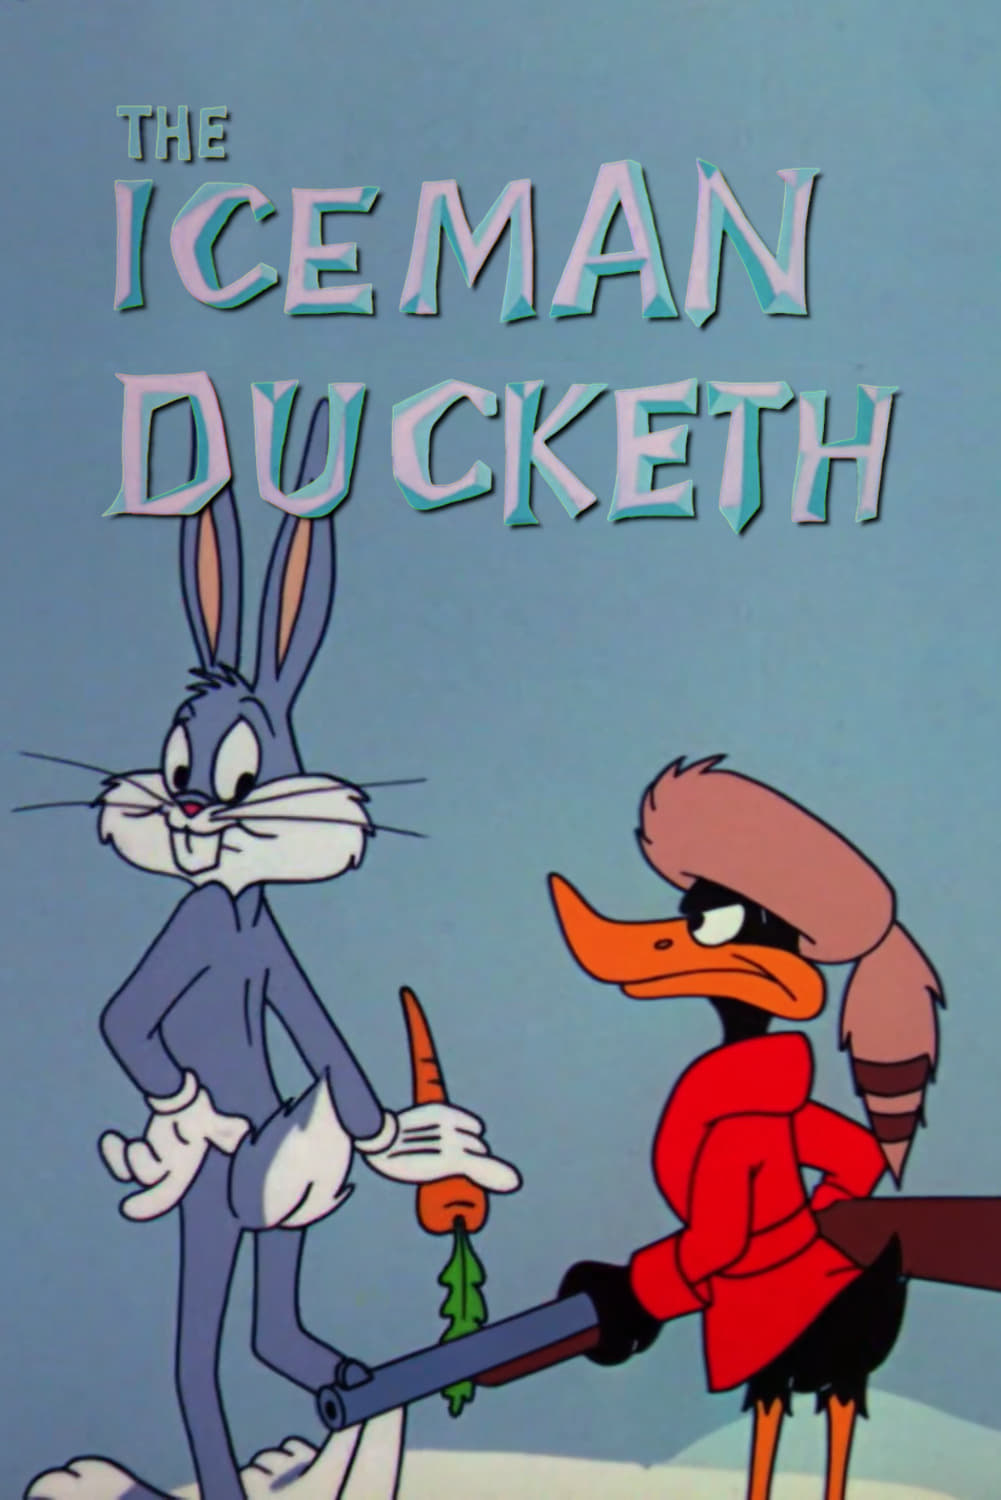 The Iceman Ducketh (1964)